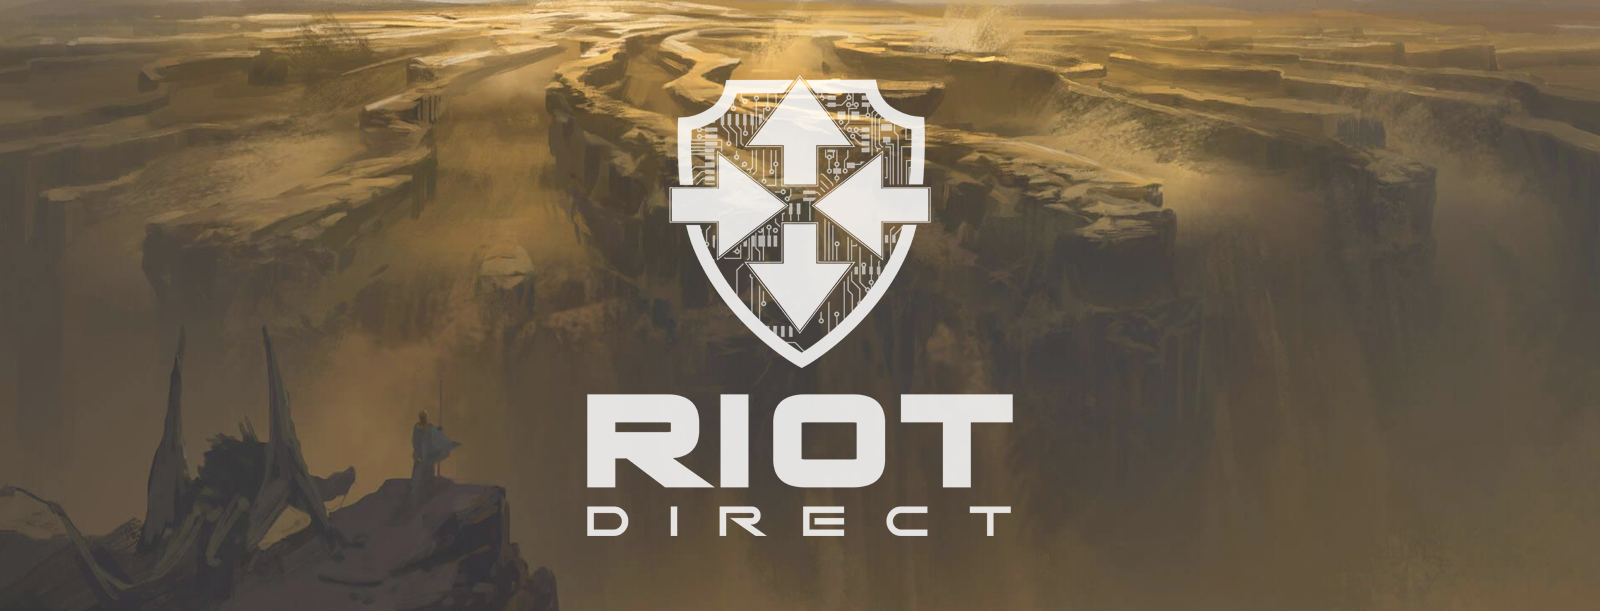 Riot Games Service Status